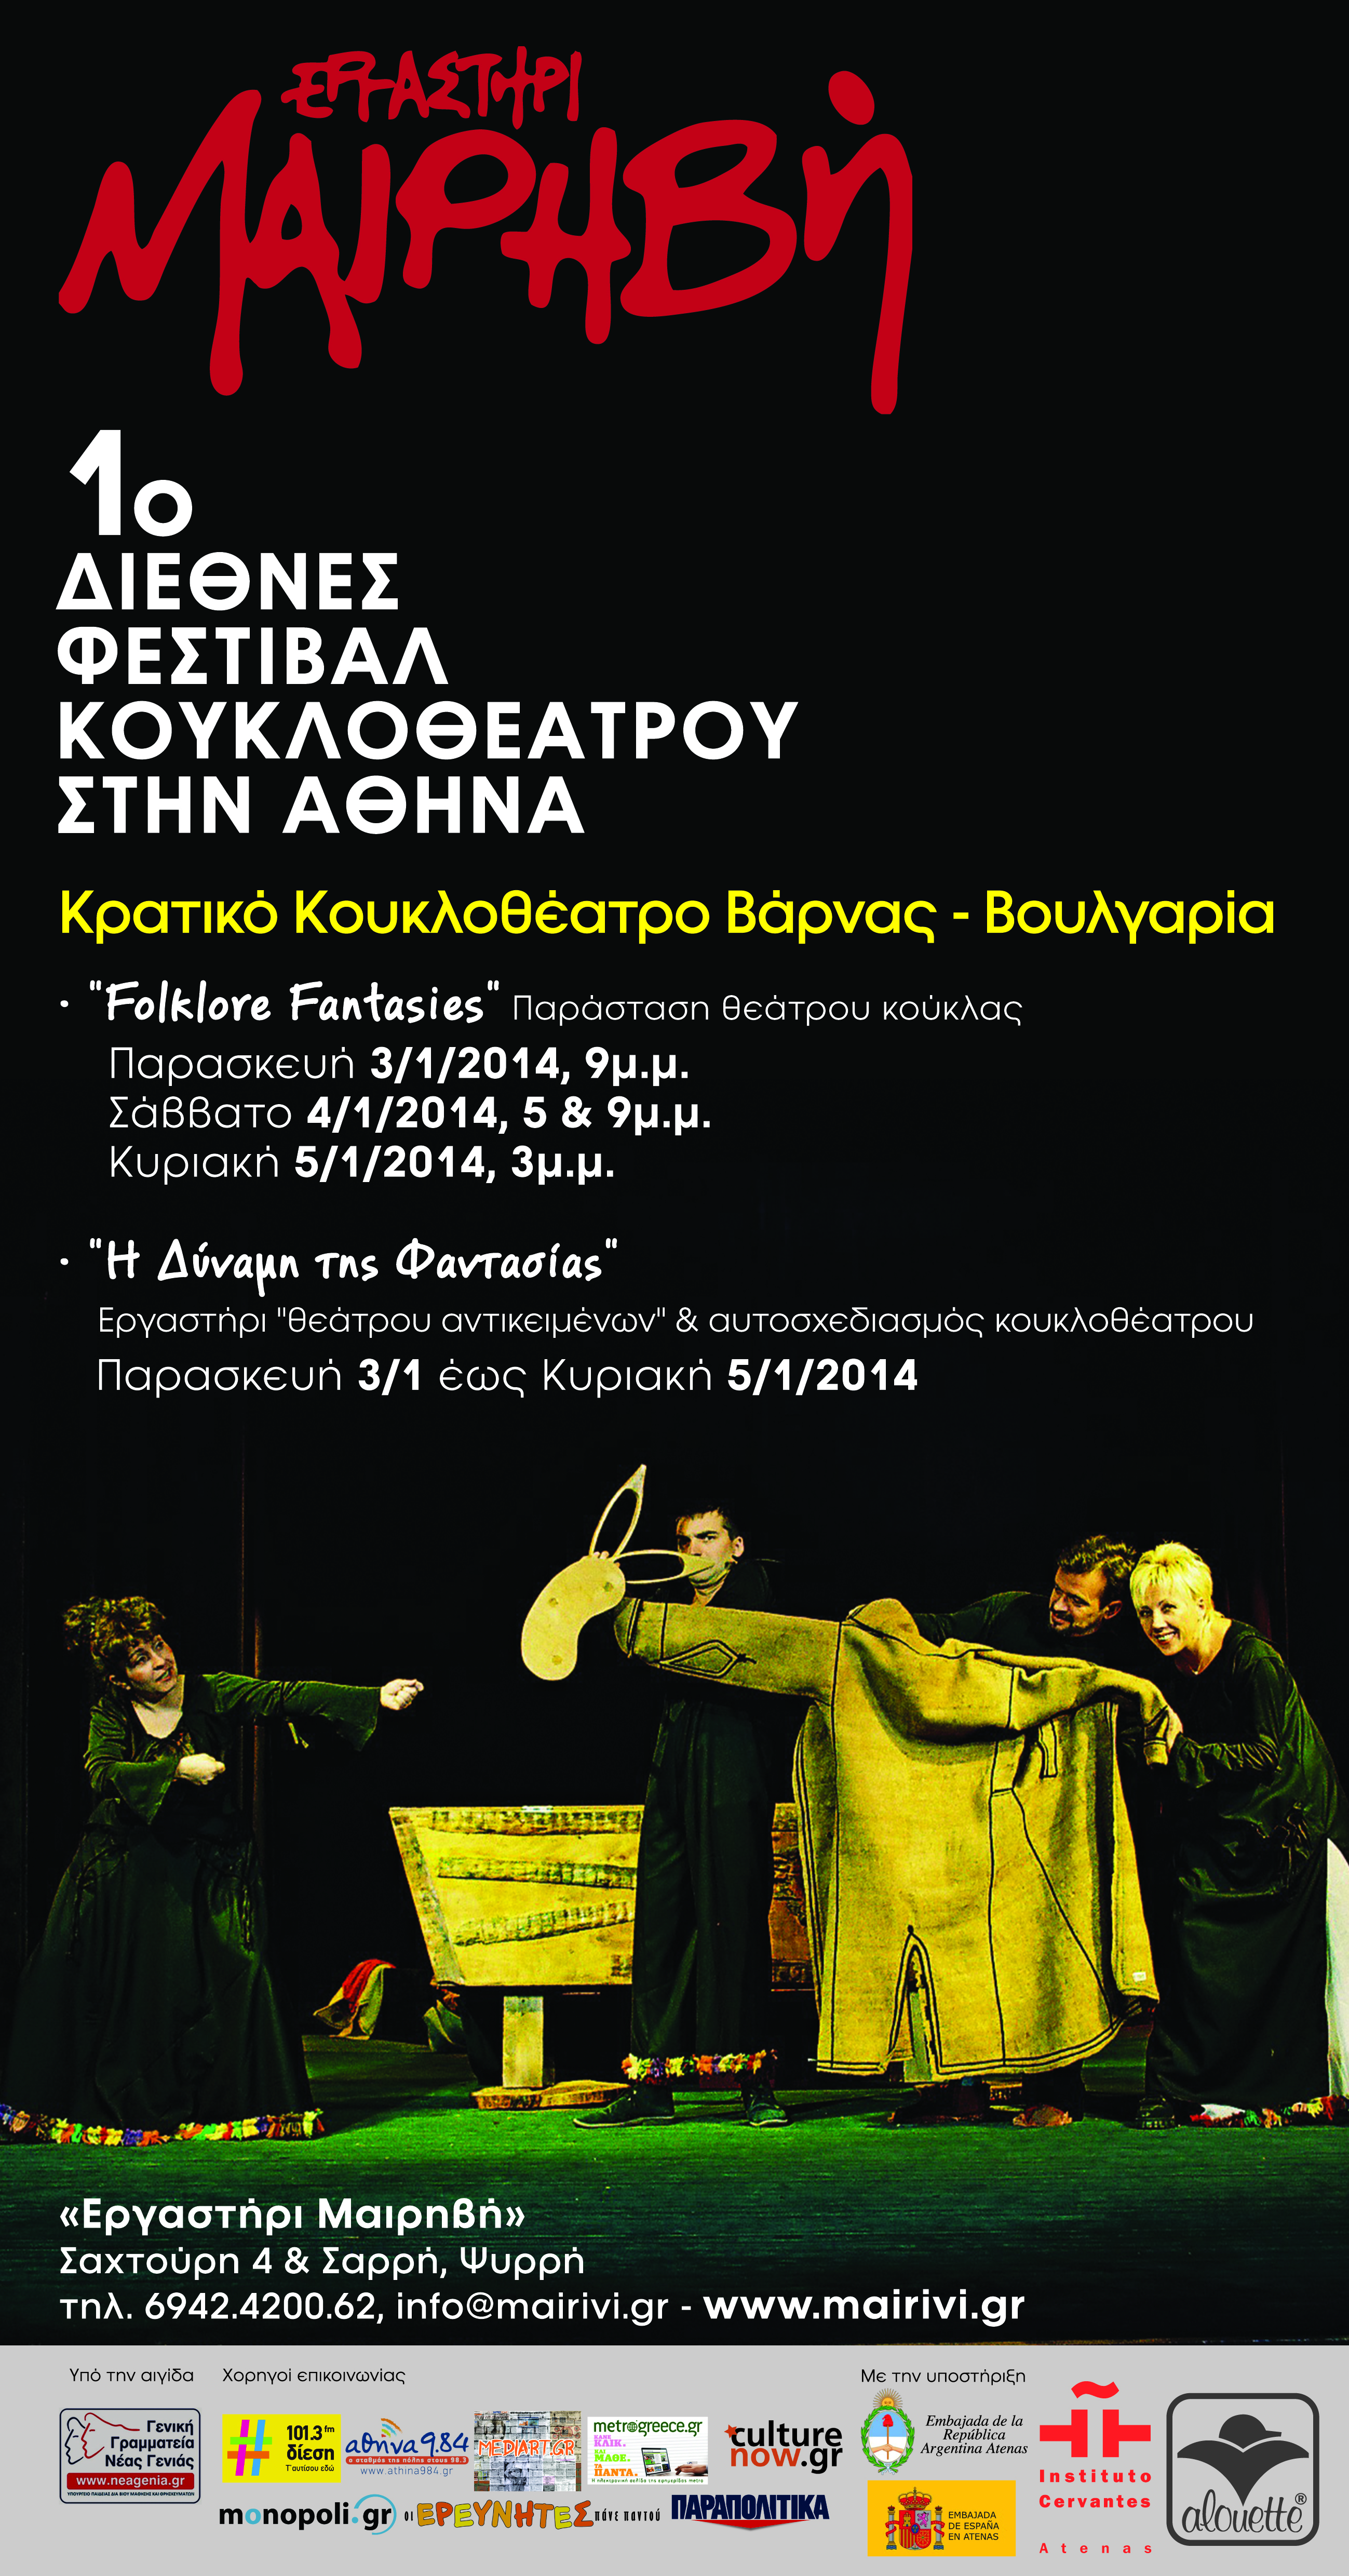 1o Διεθνές Φεστιβάλ Κουκλοθέατρου και Αφήγησης στην Αθήνα